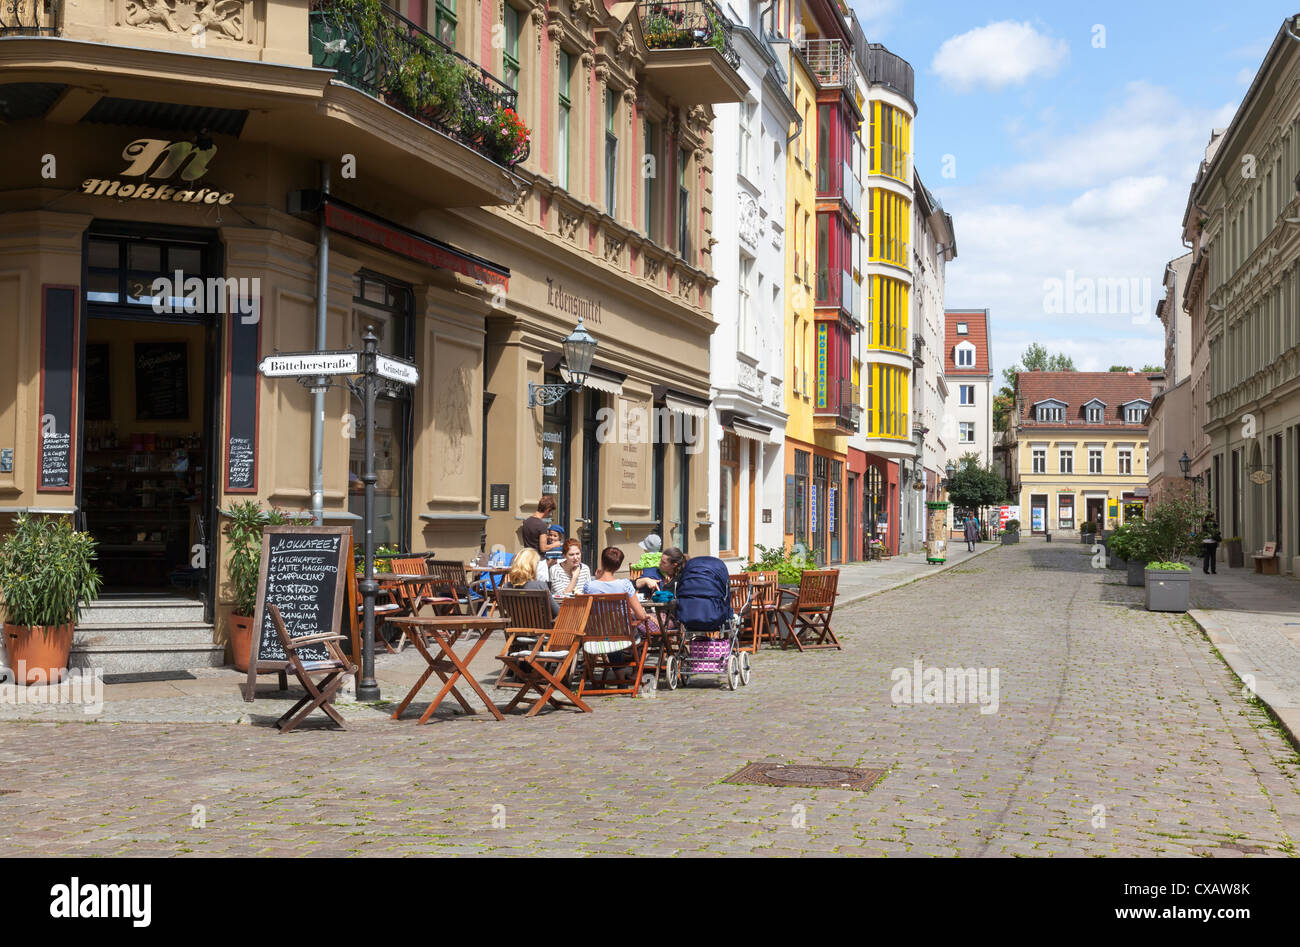 Rue et cafe par Mairie, Koepenick, Berlin, Allemagne Banque D'Images